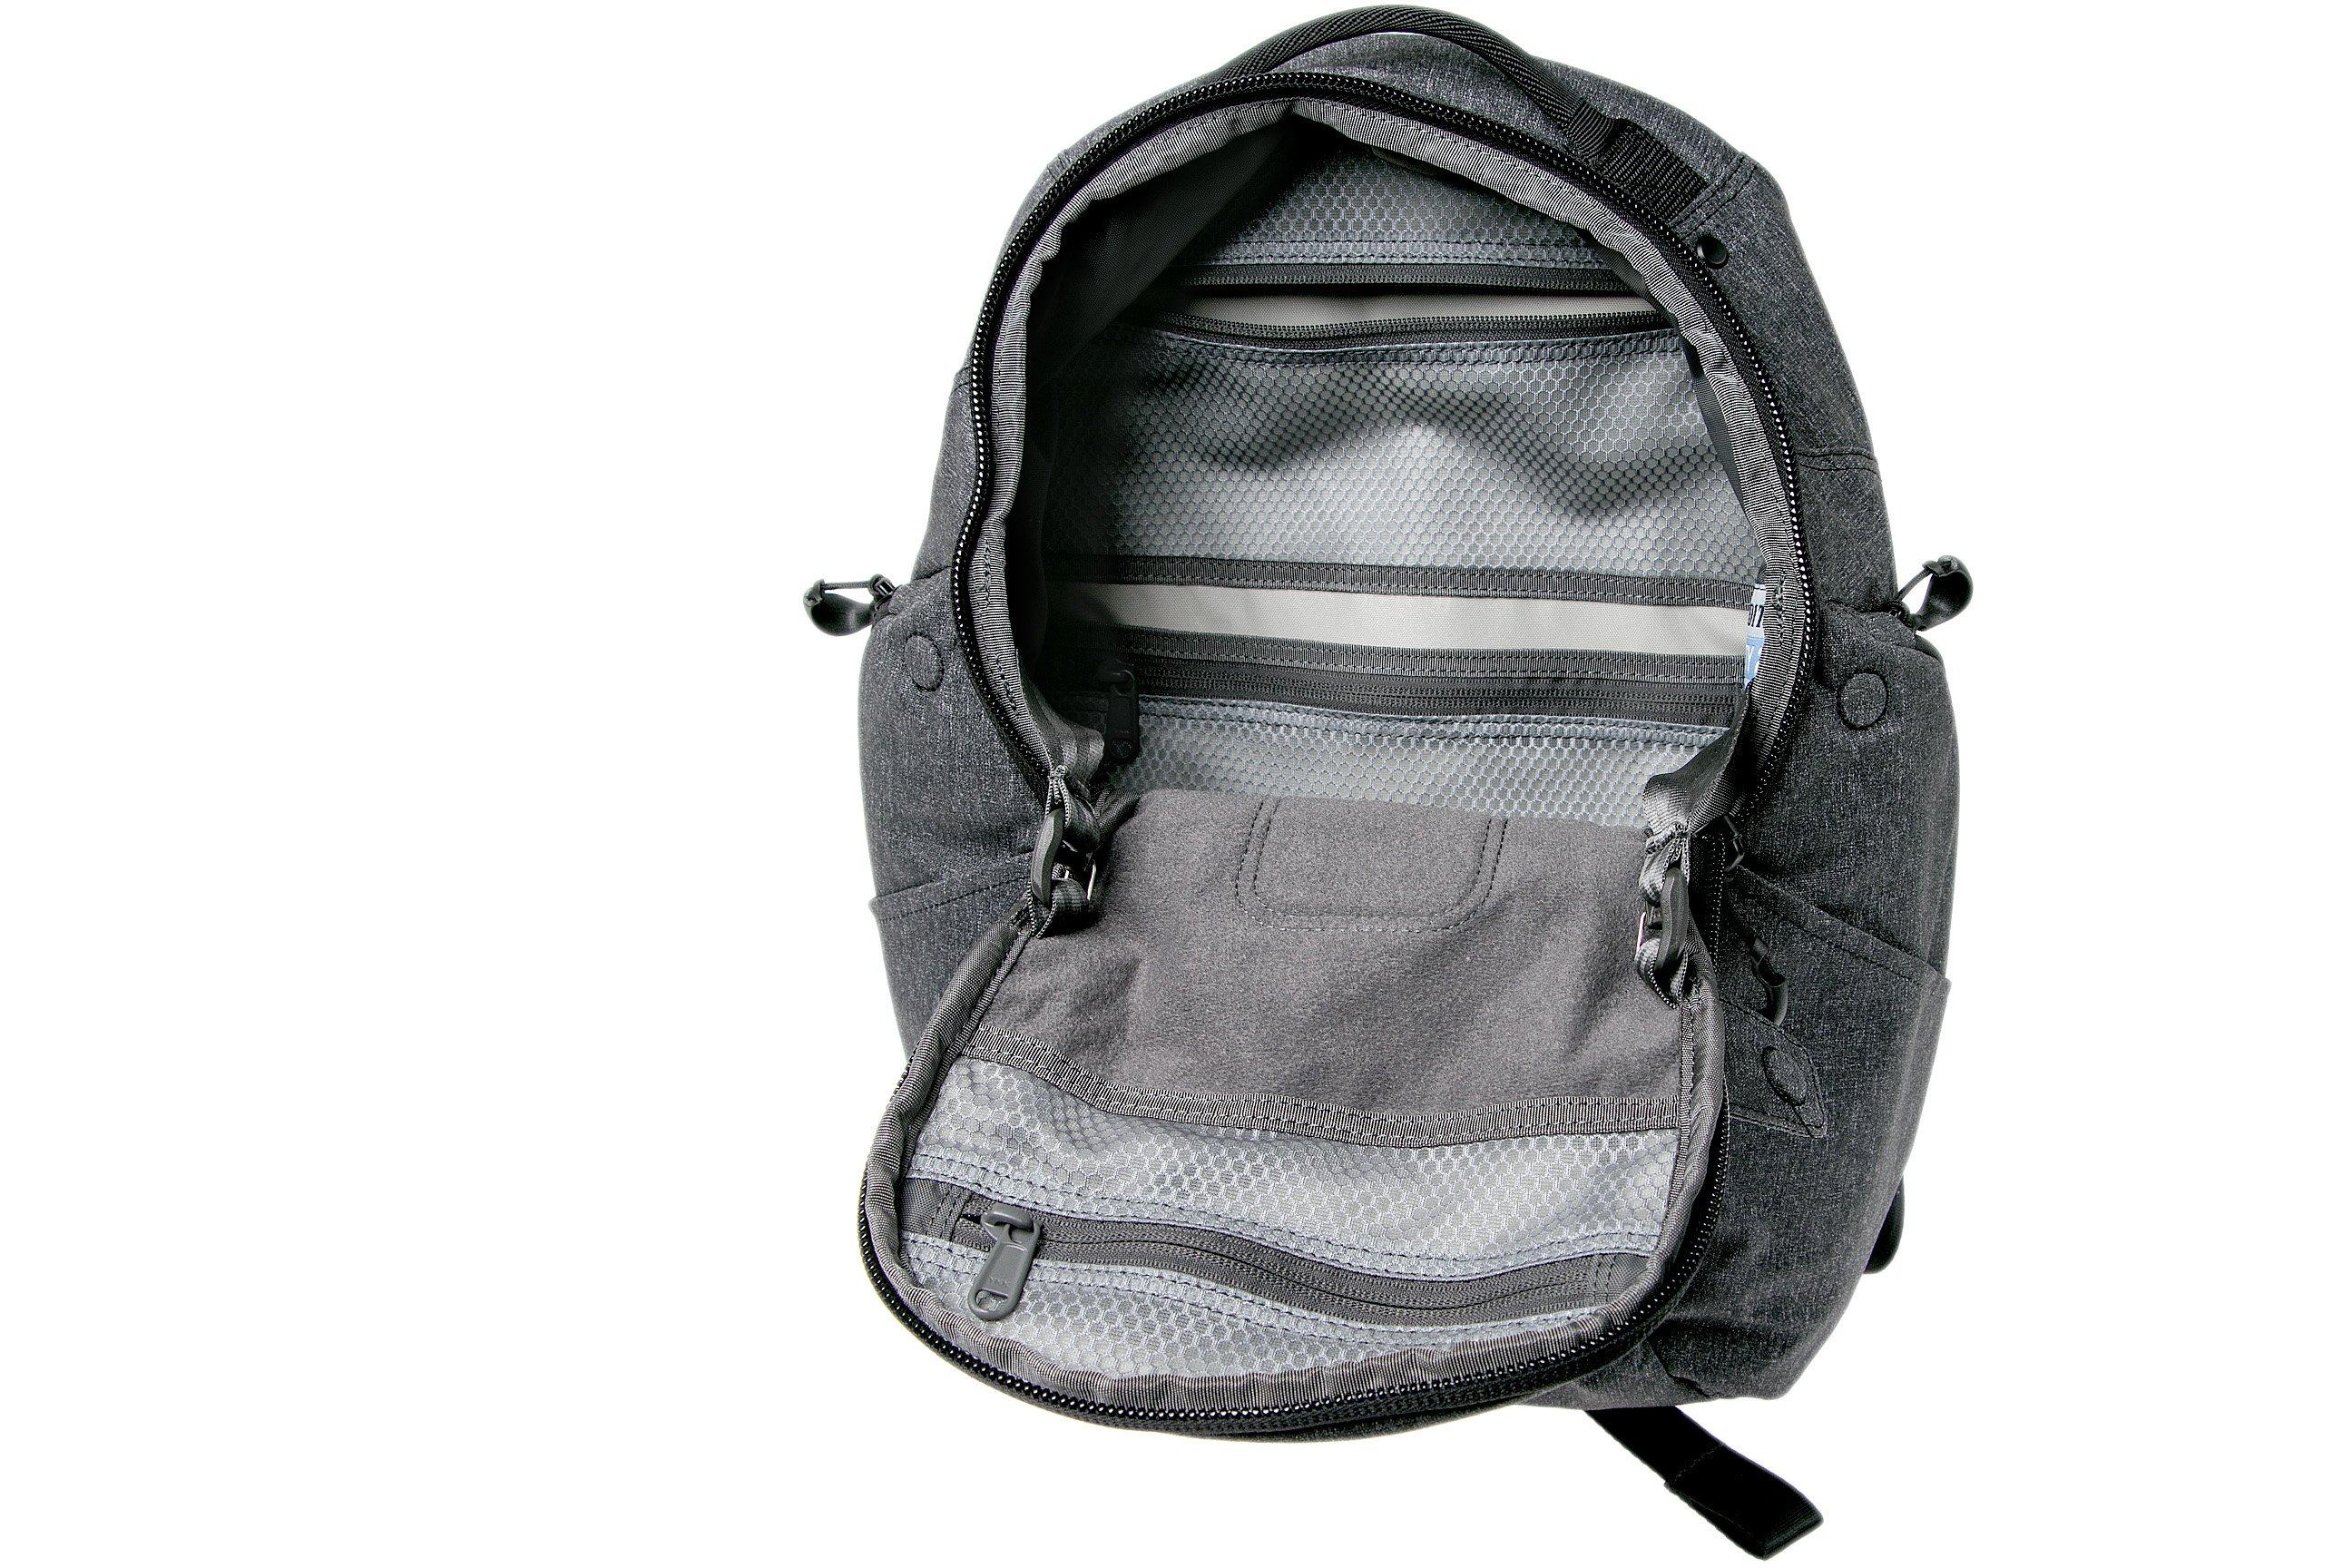 Maxpedition Entity 21 EDC backpack 21L NTTPK21CH Advantageously shopping  at